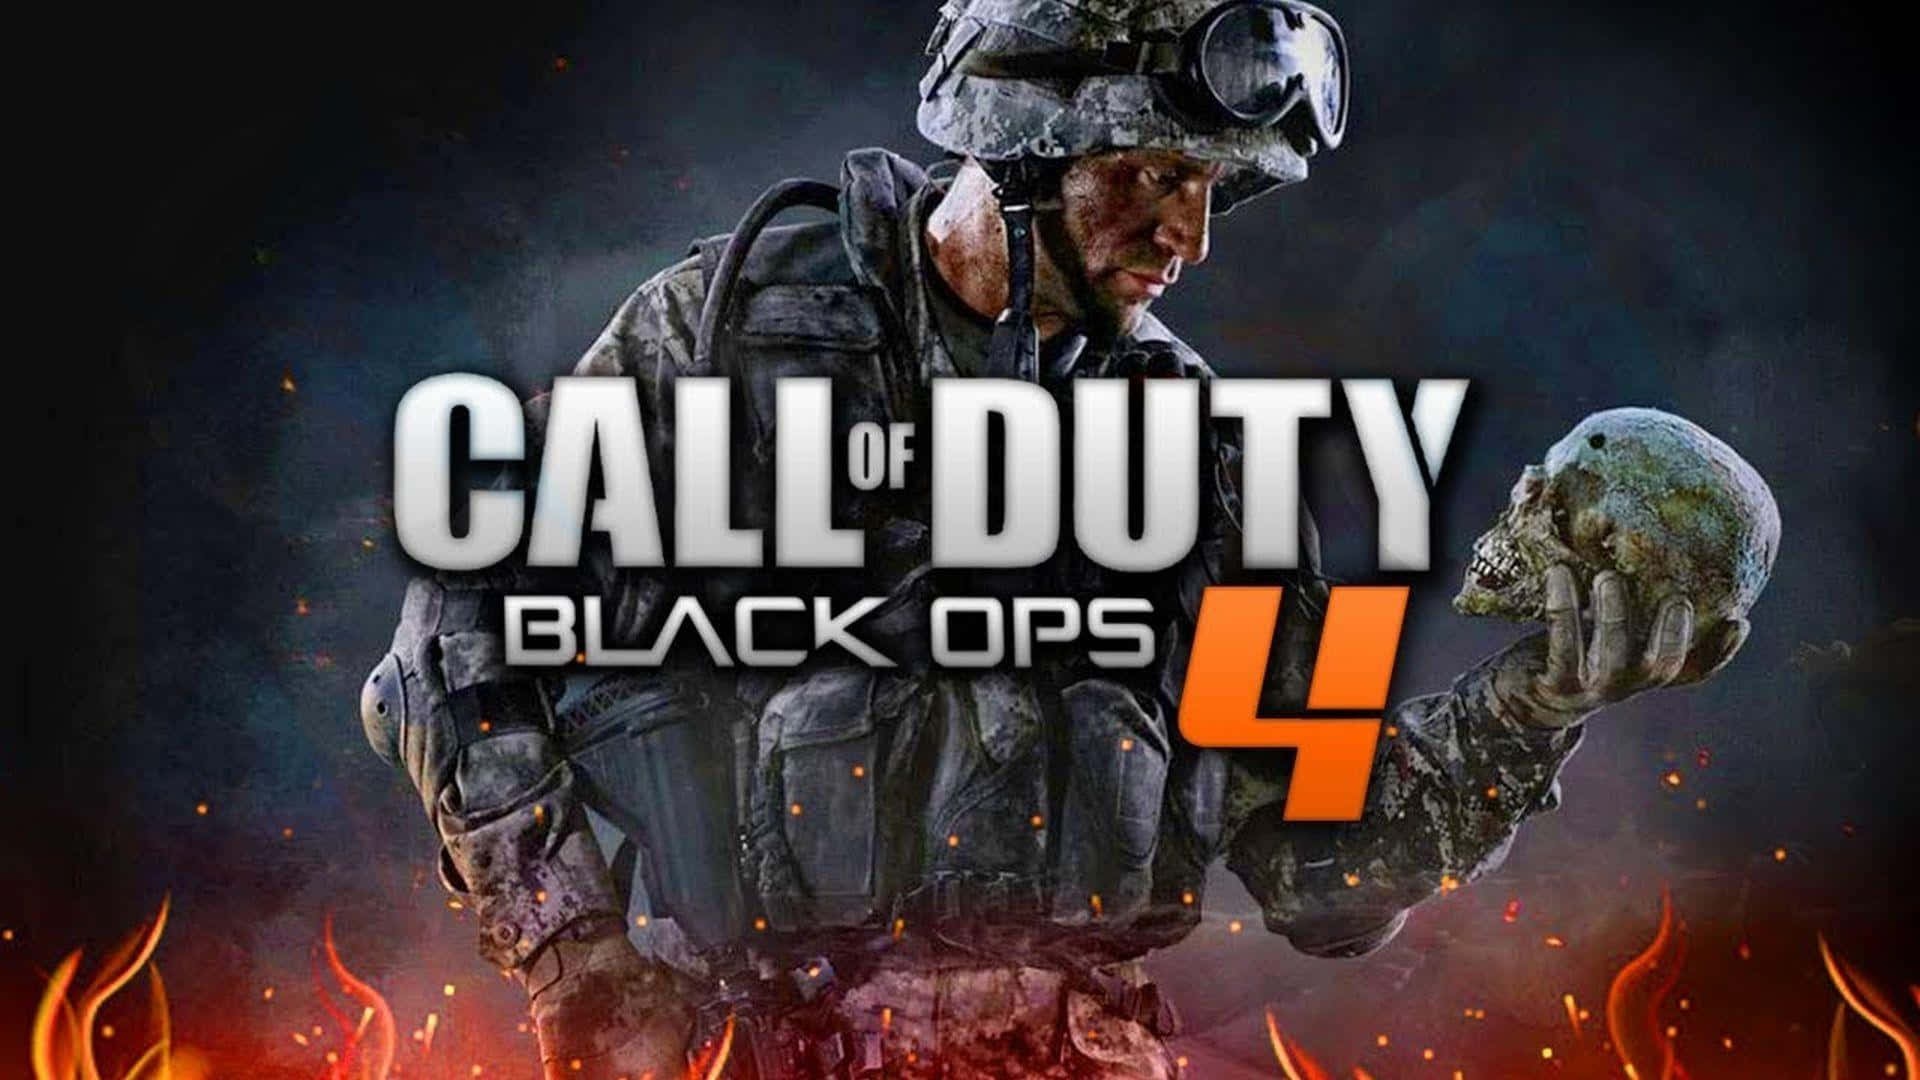 Viviun'esperienza Intensa In Multiplayer In Call Of Duty Black Ops 4